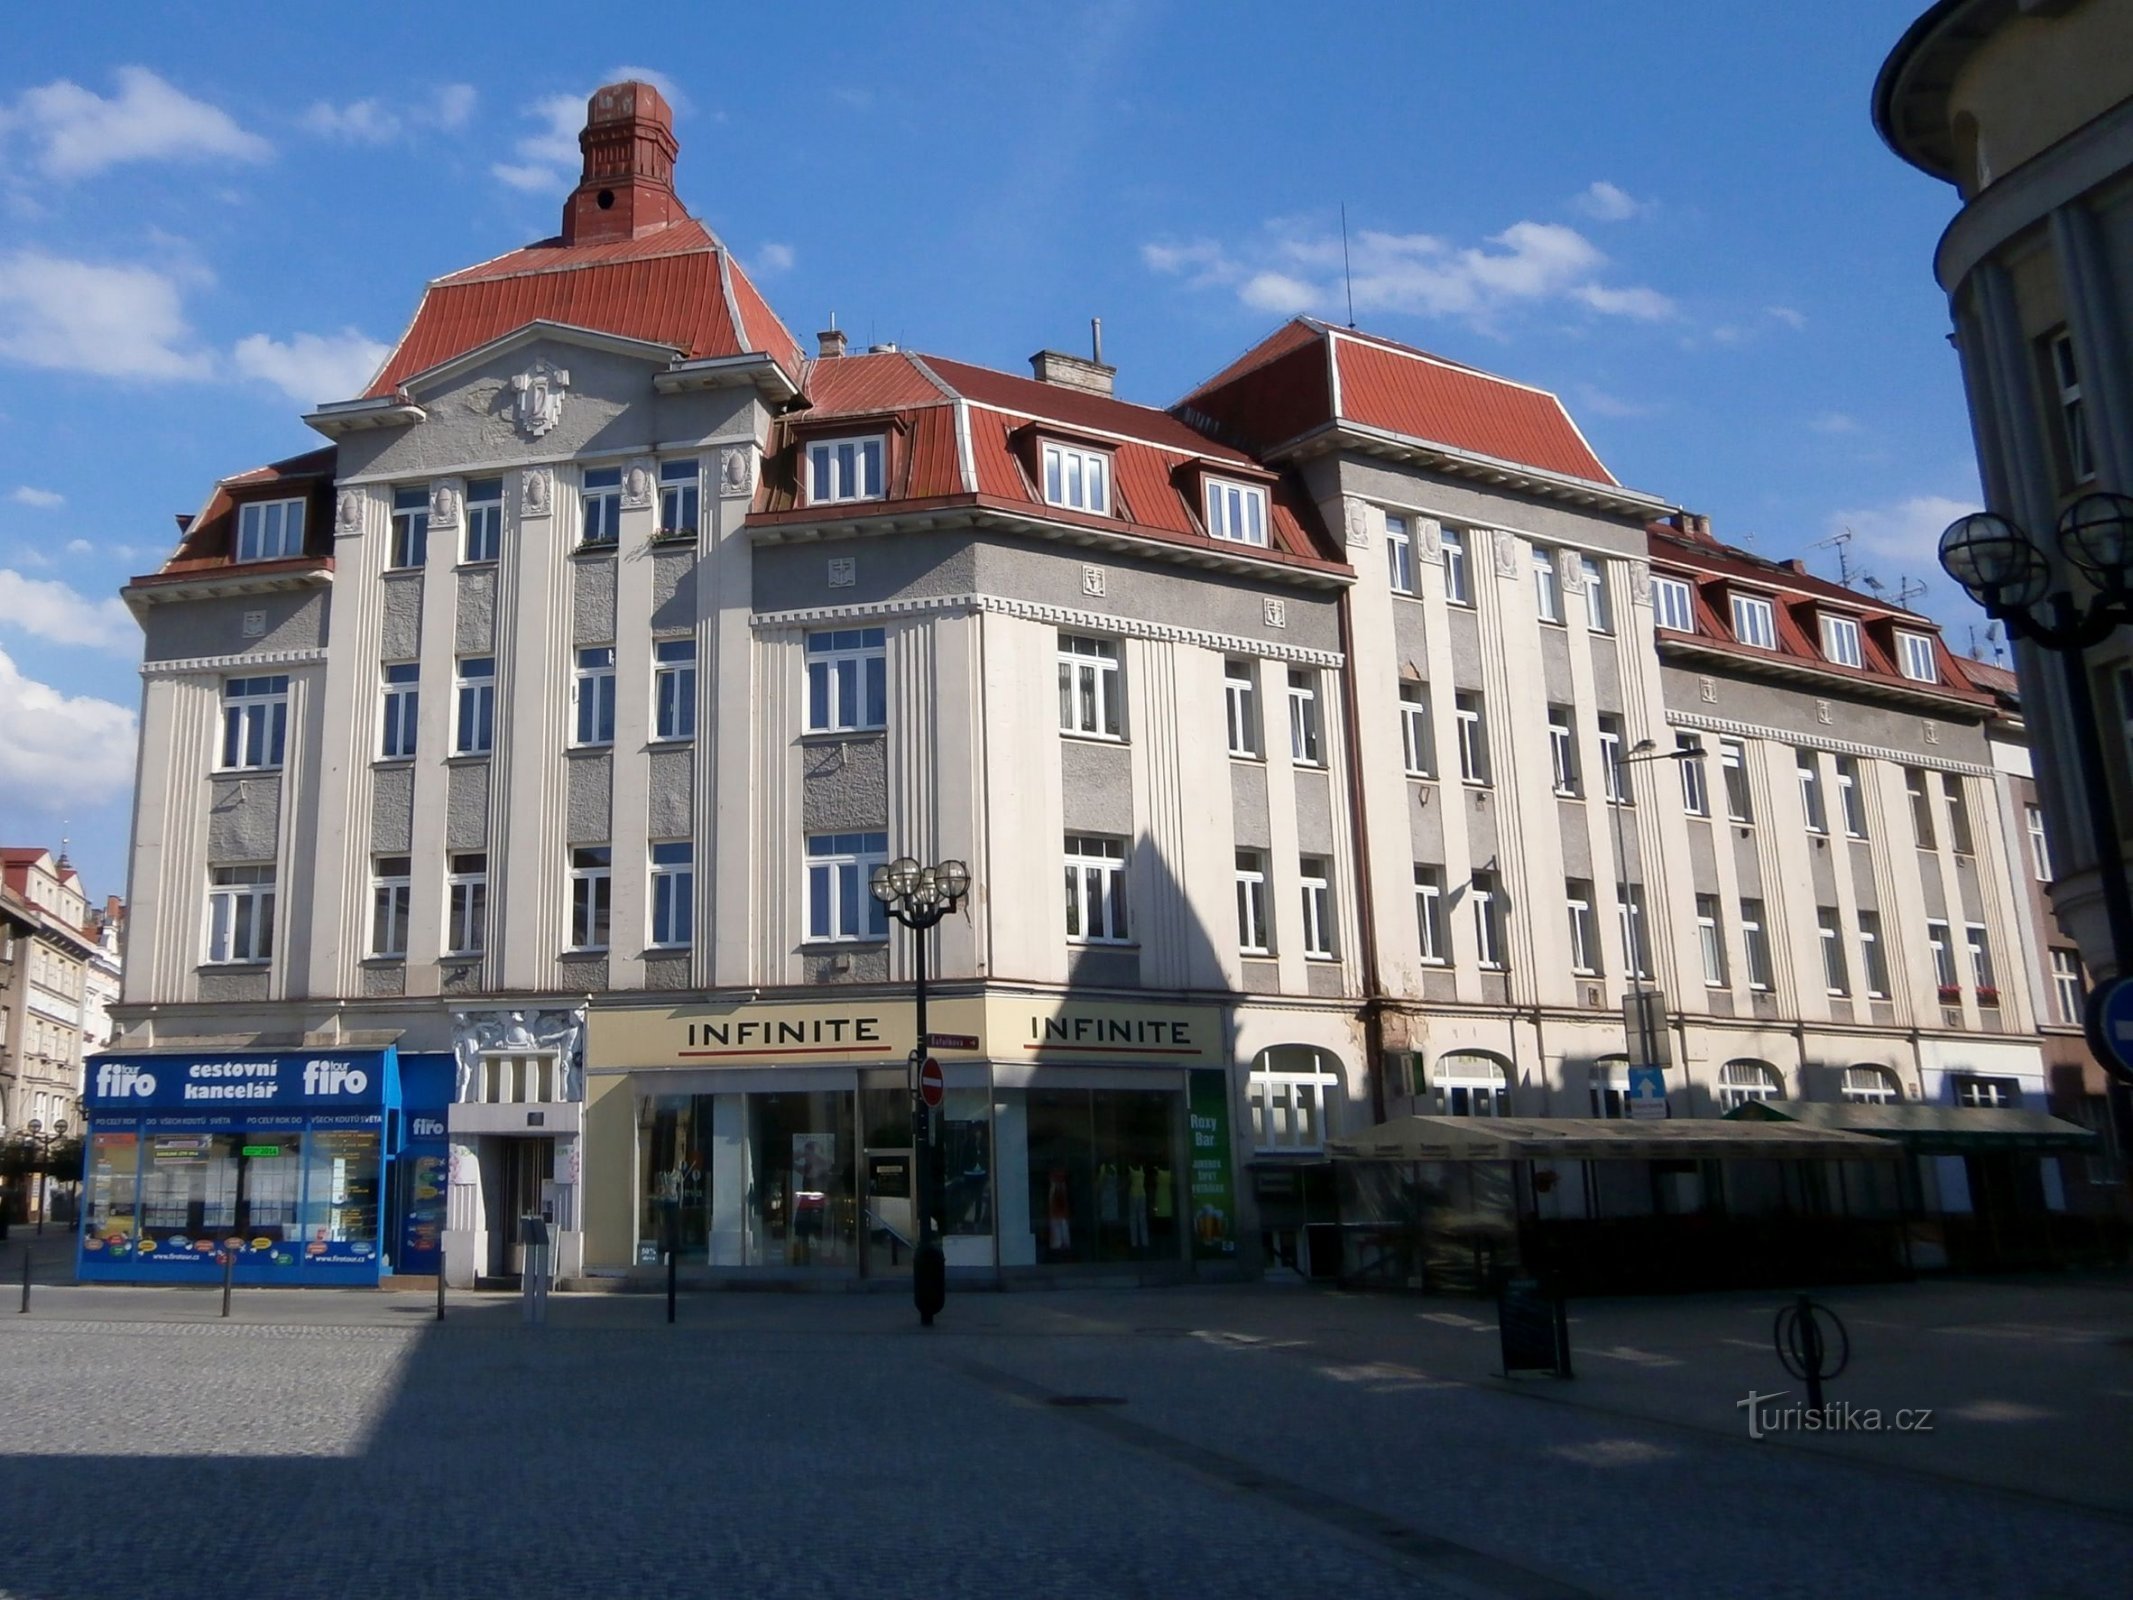 Handelshus (Hradec Králové, 28.6.2014)